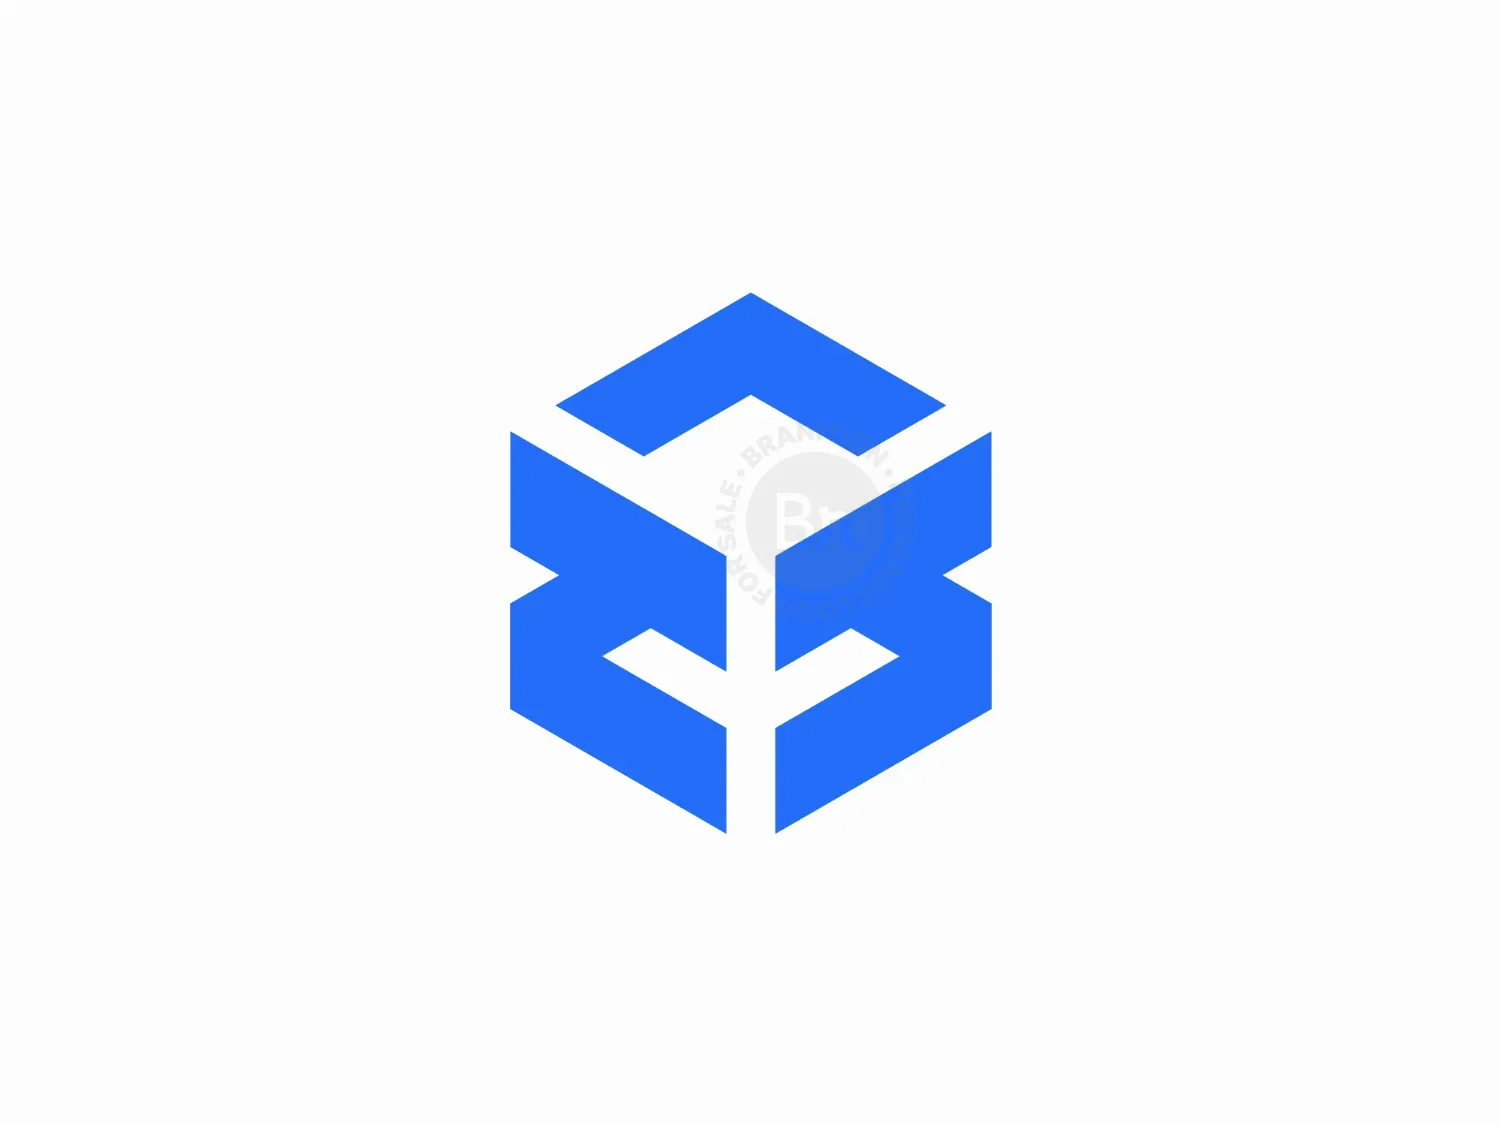 Abstract Cube Logo